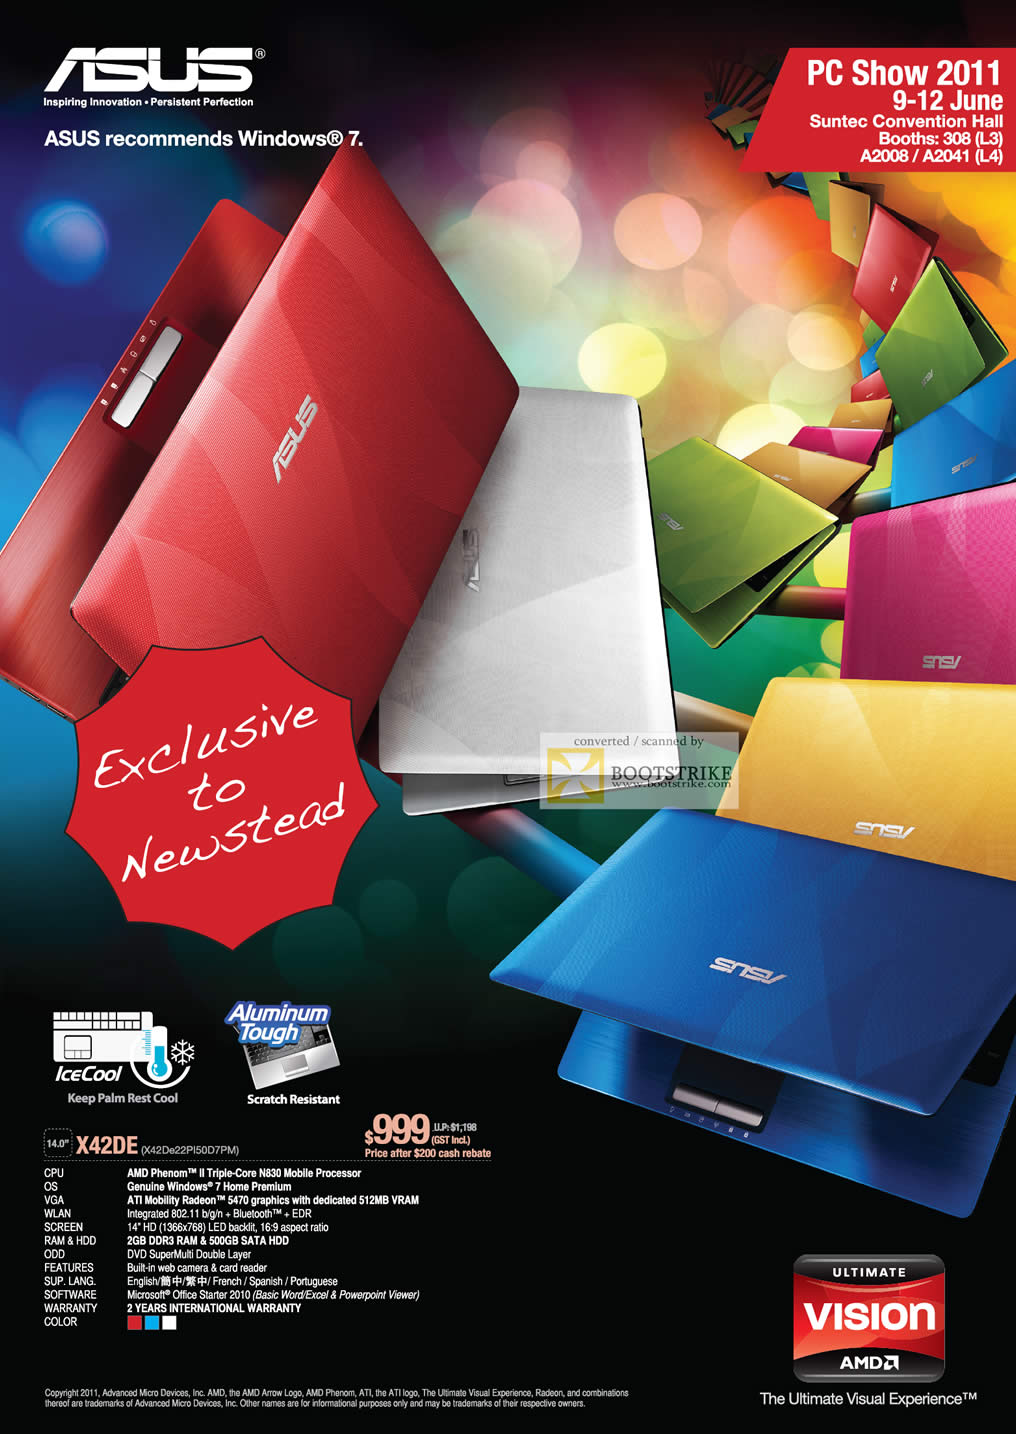 PC Show 2011 price list image brochure of ASUS Newstead Notebook X42DE